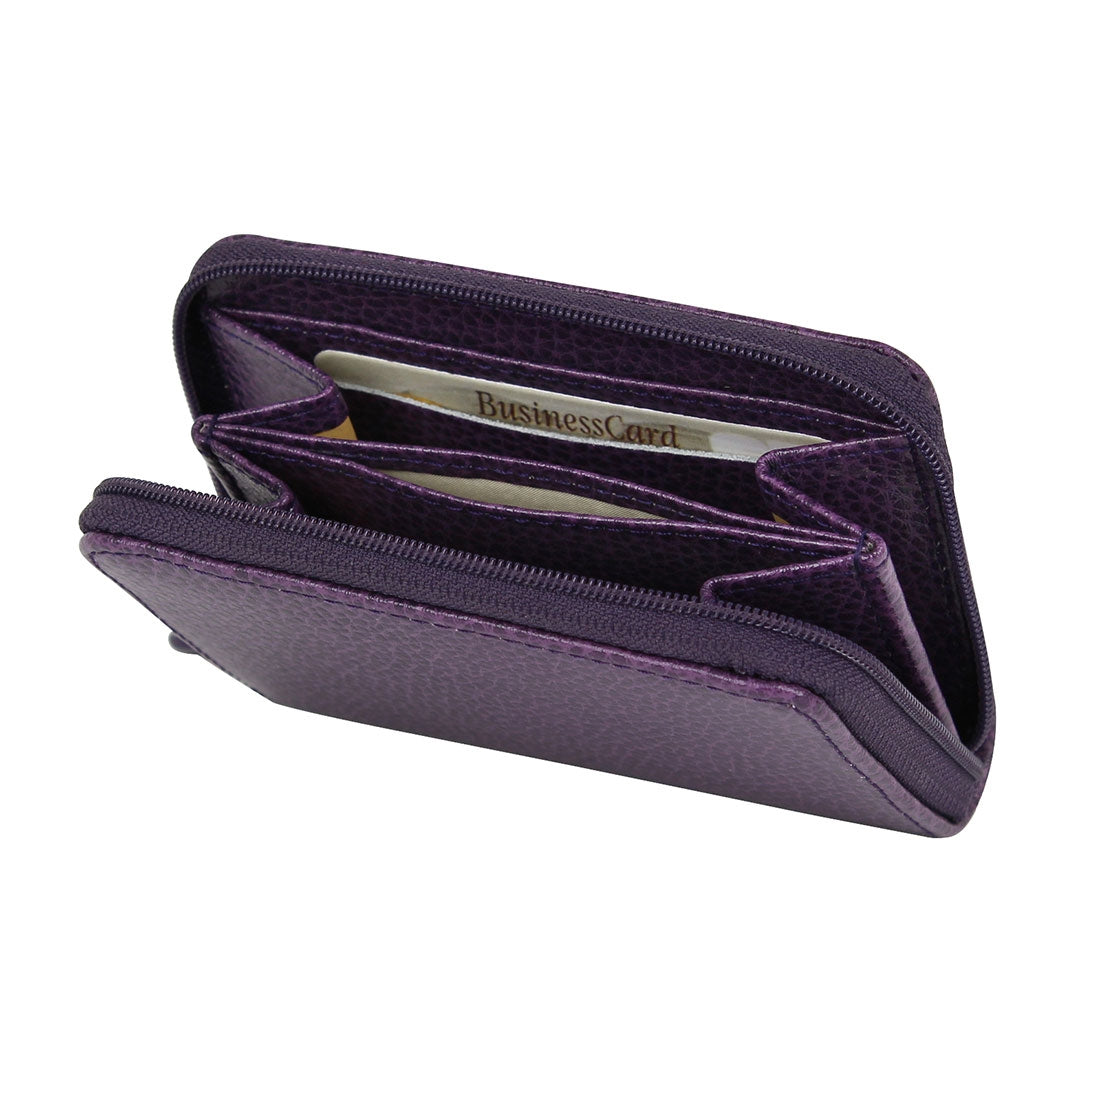 Small Wallet - Violet#colour_laurige-violet